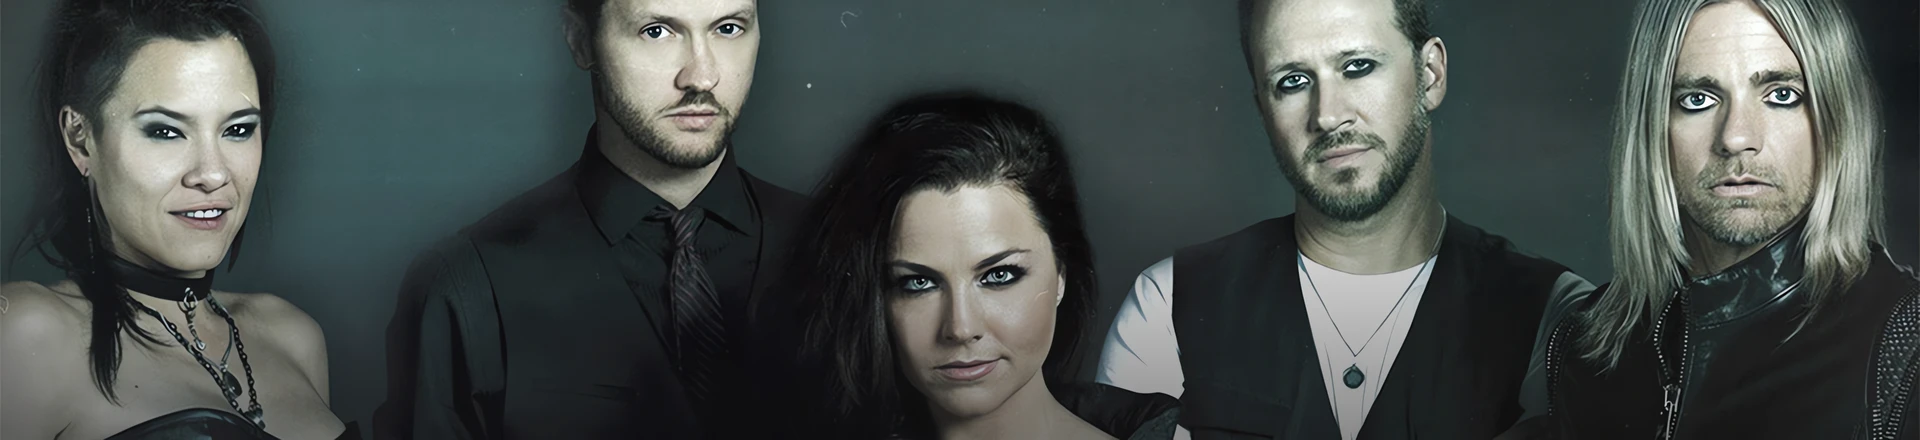 Hollywood romansuje z Evanescence 